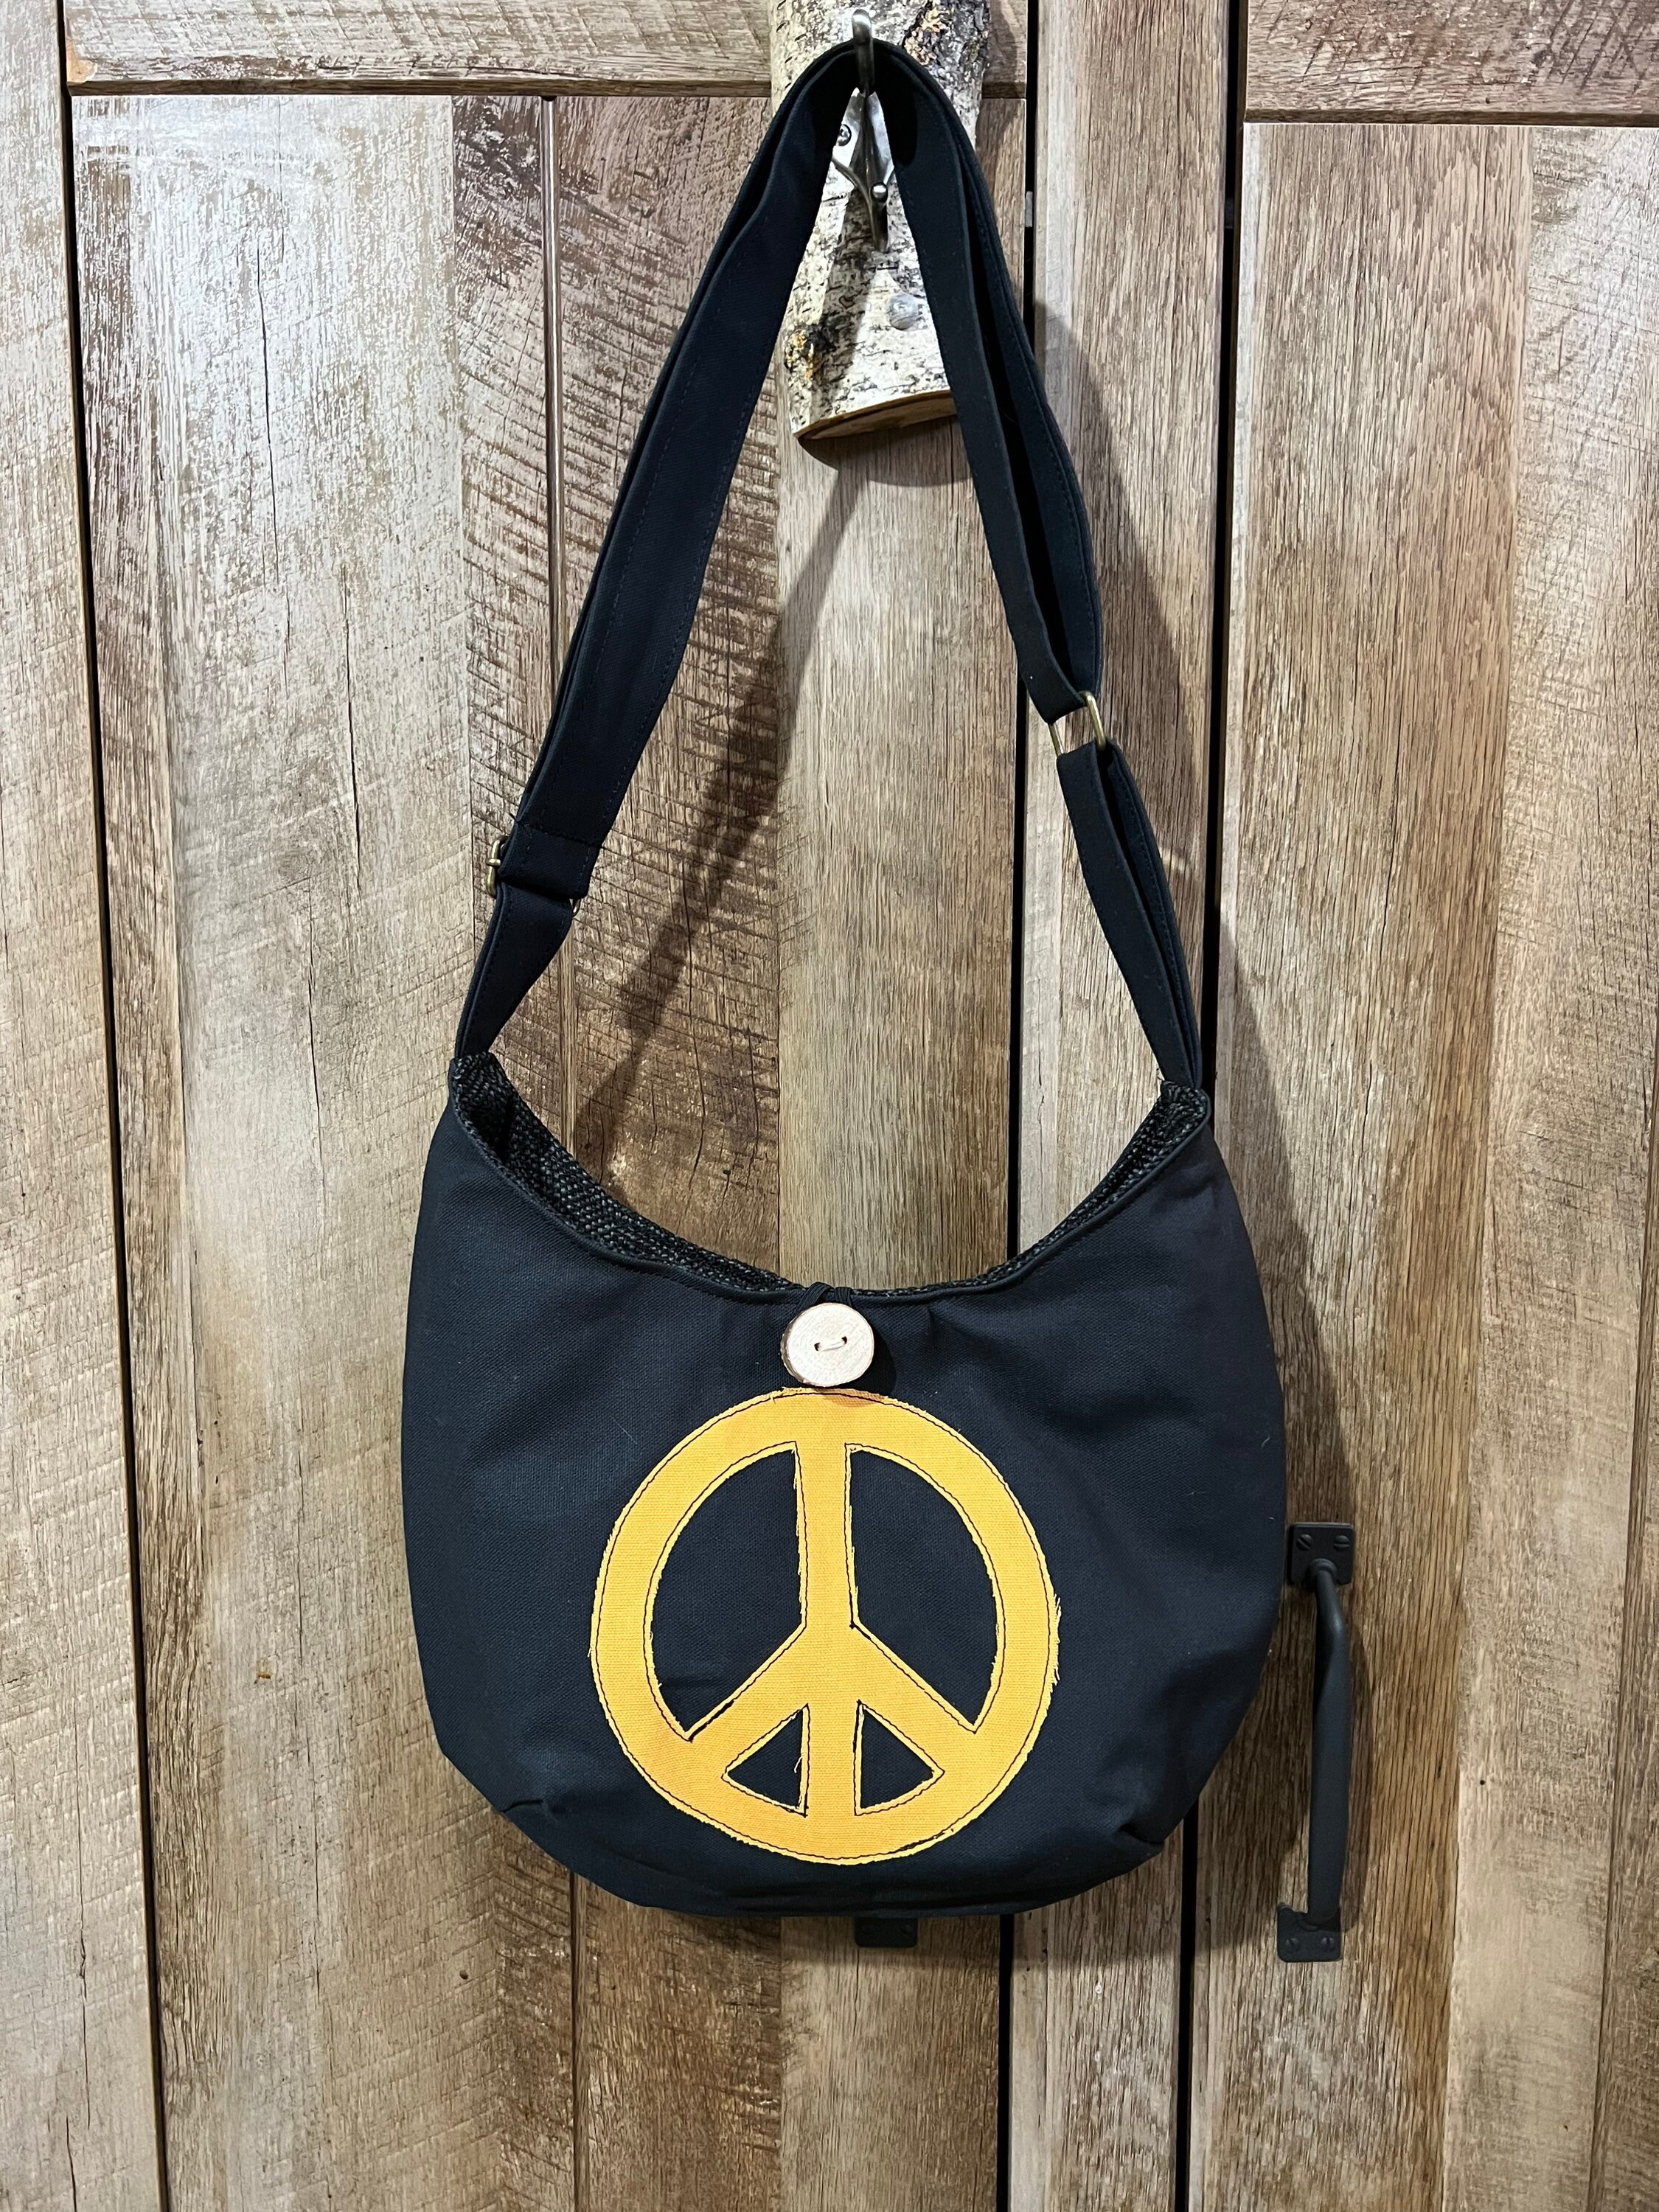 Purse peace : r/handbags